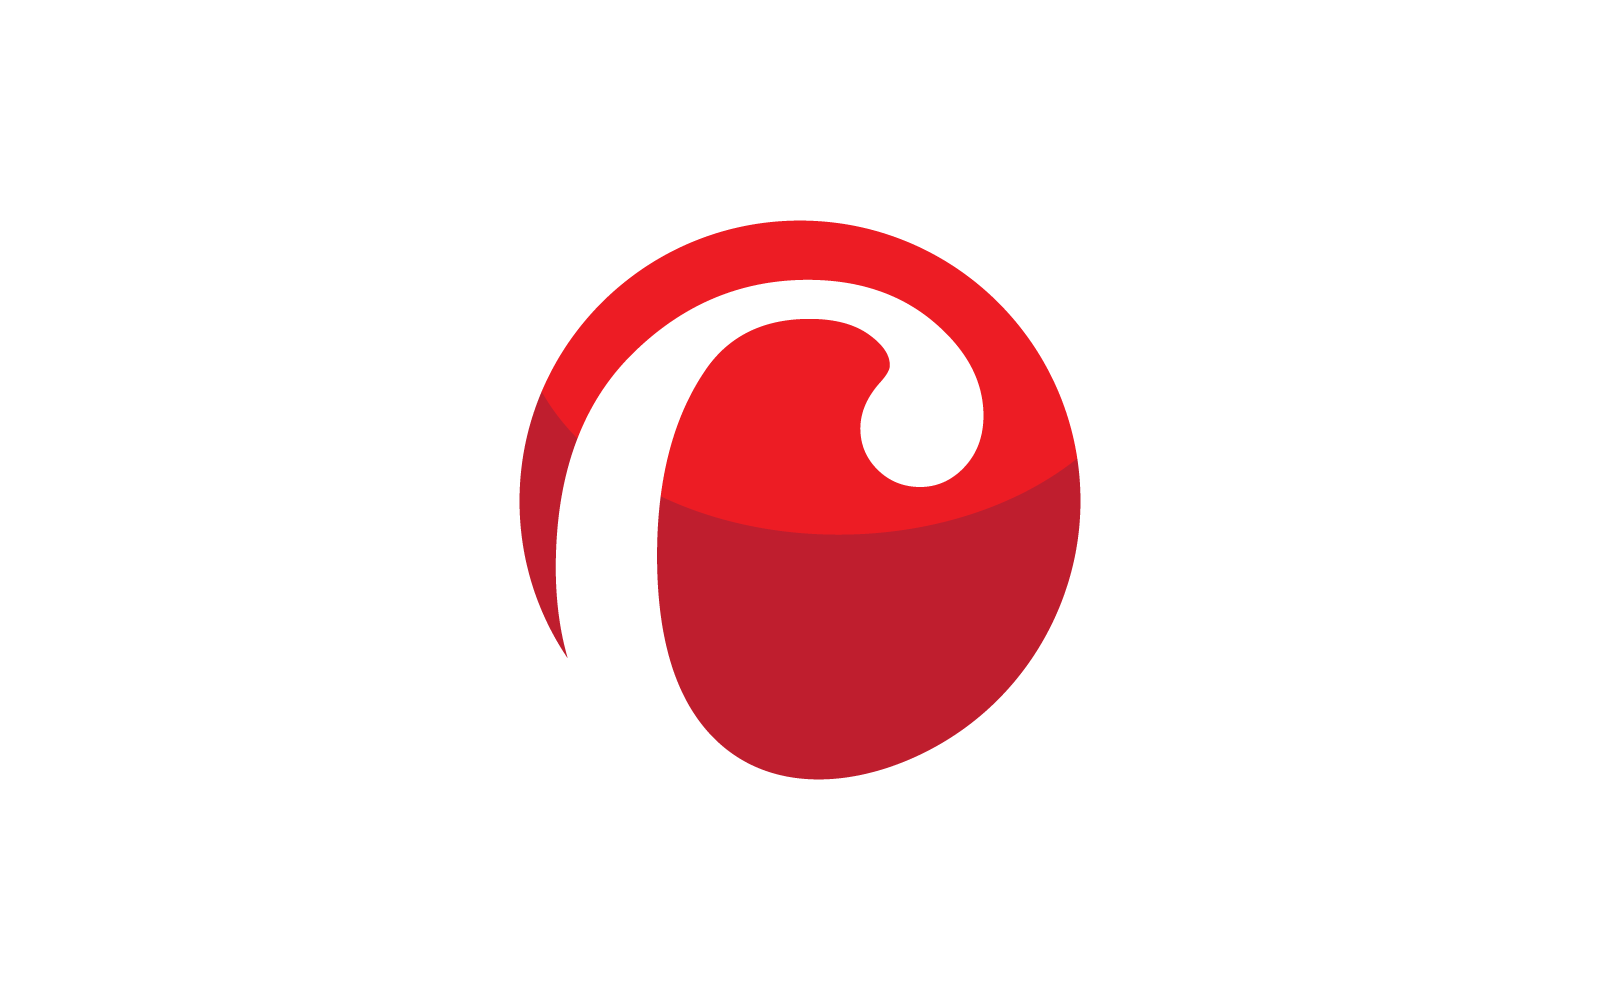 C letter logo template icon vector design